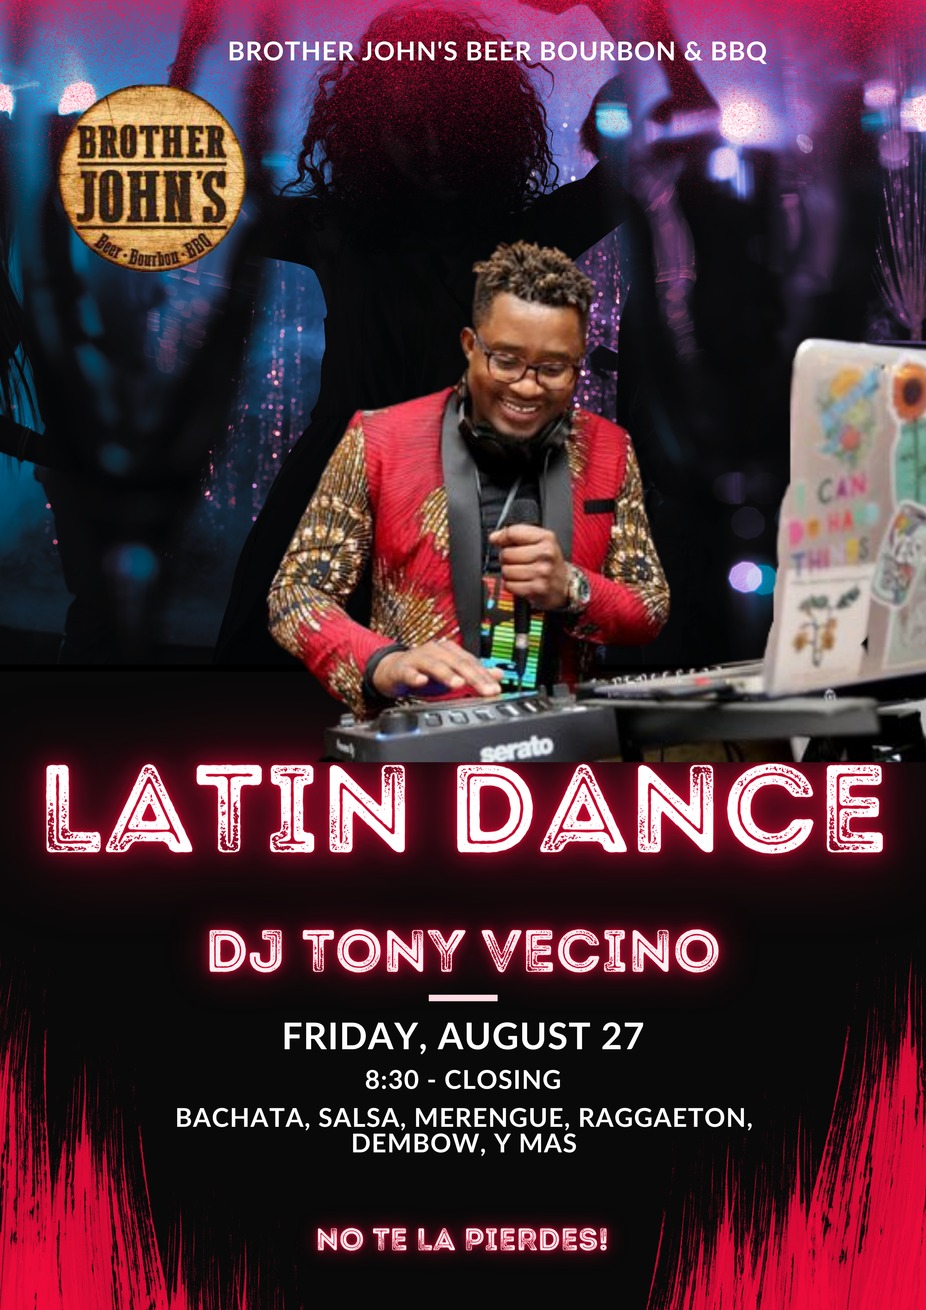 LATIN DANCE FEATURING DJ TONY VECINO event photo